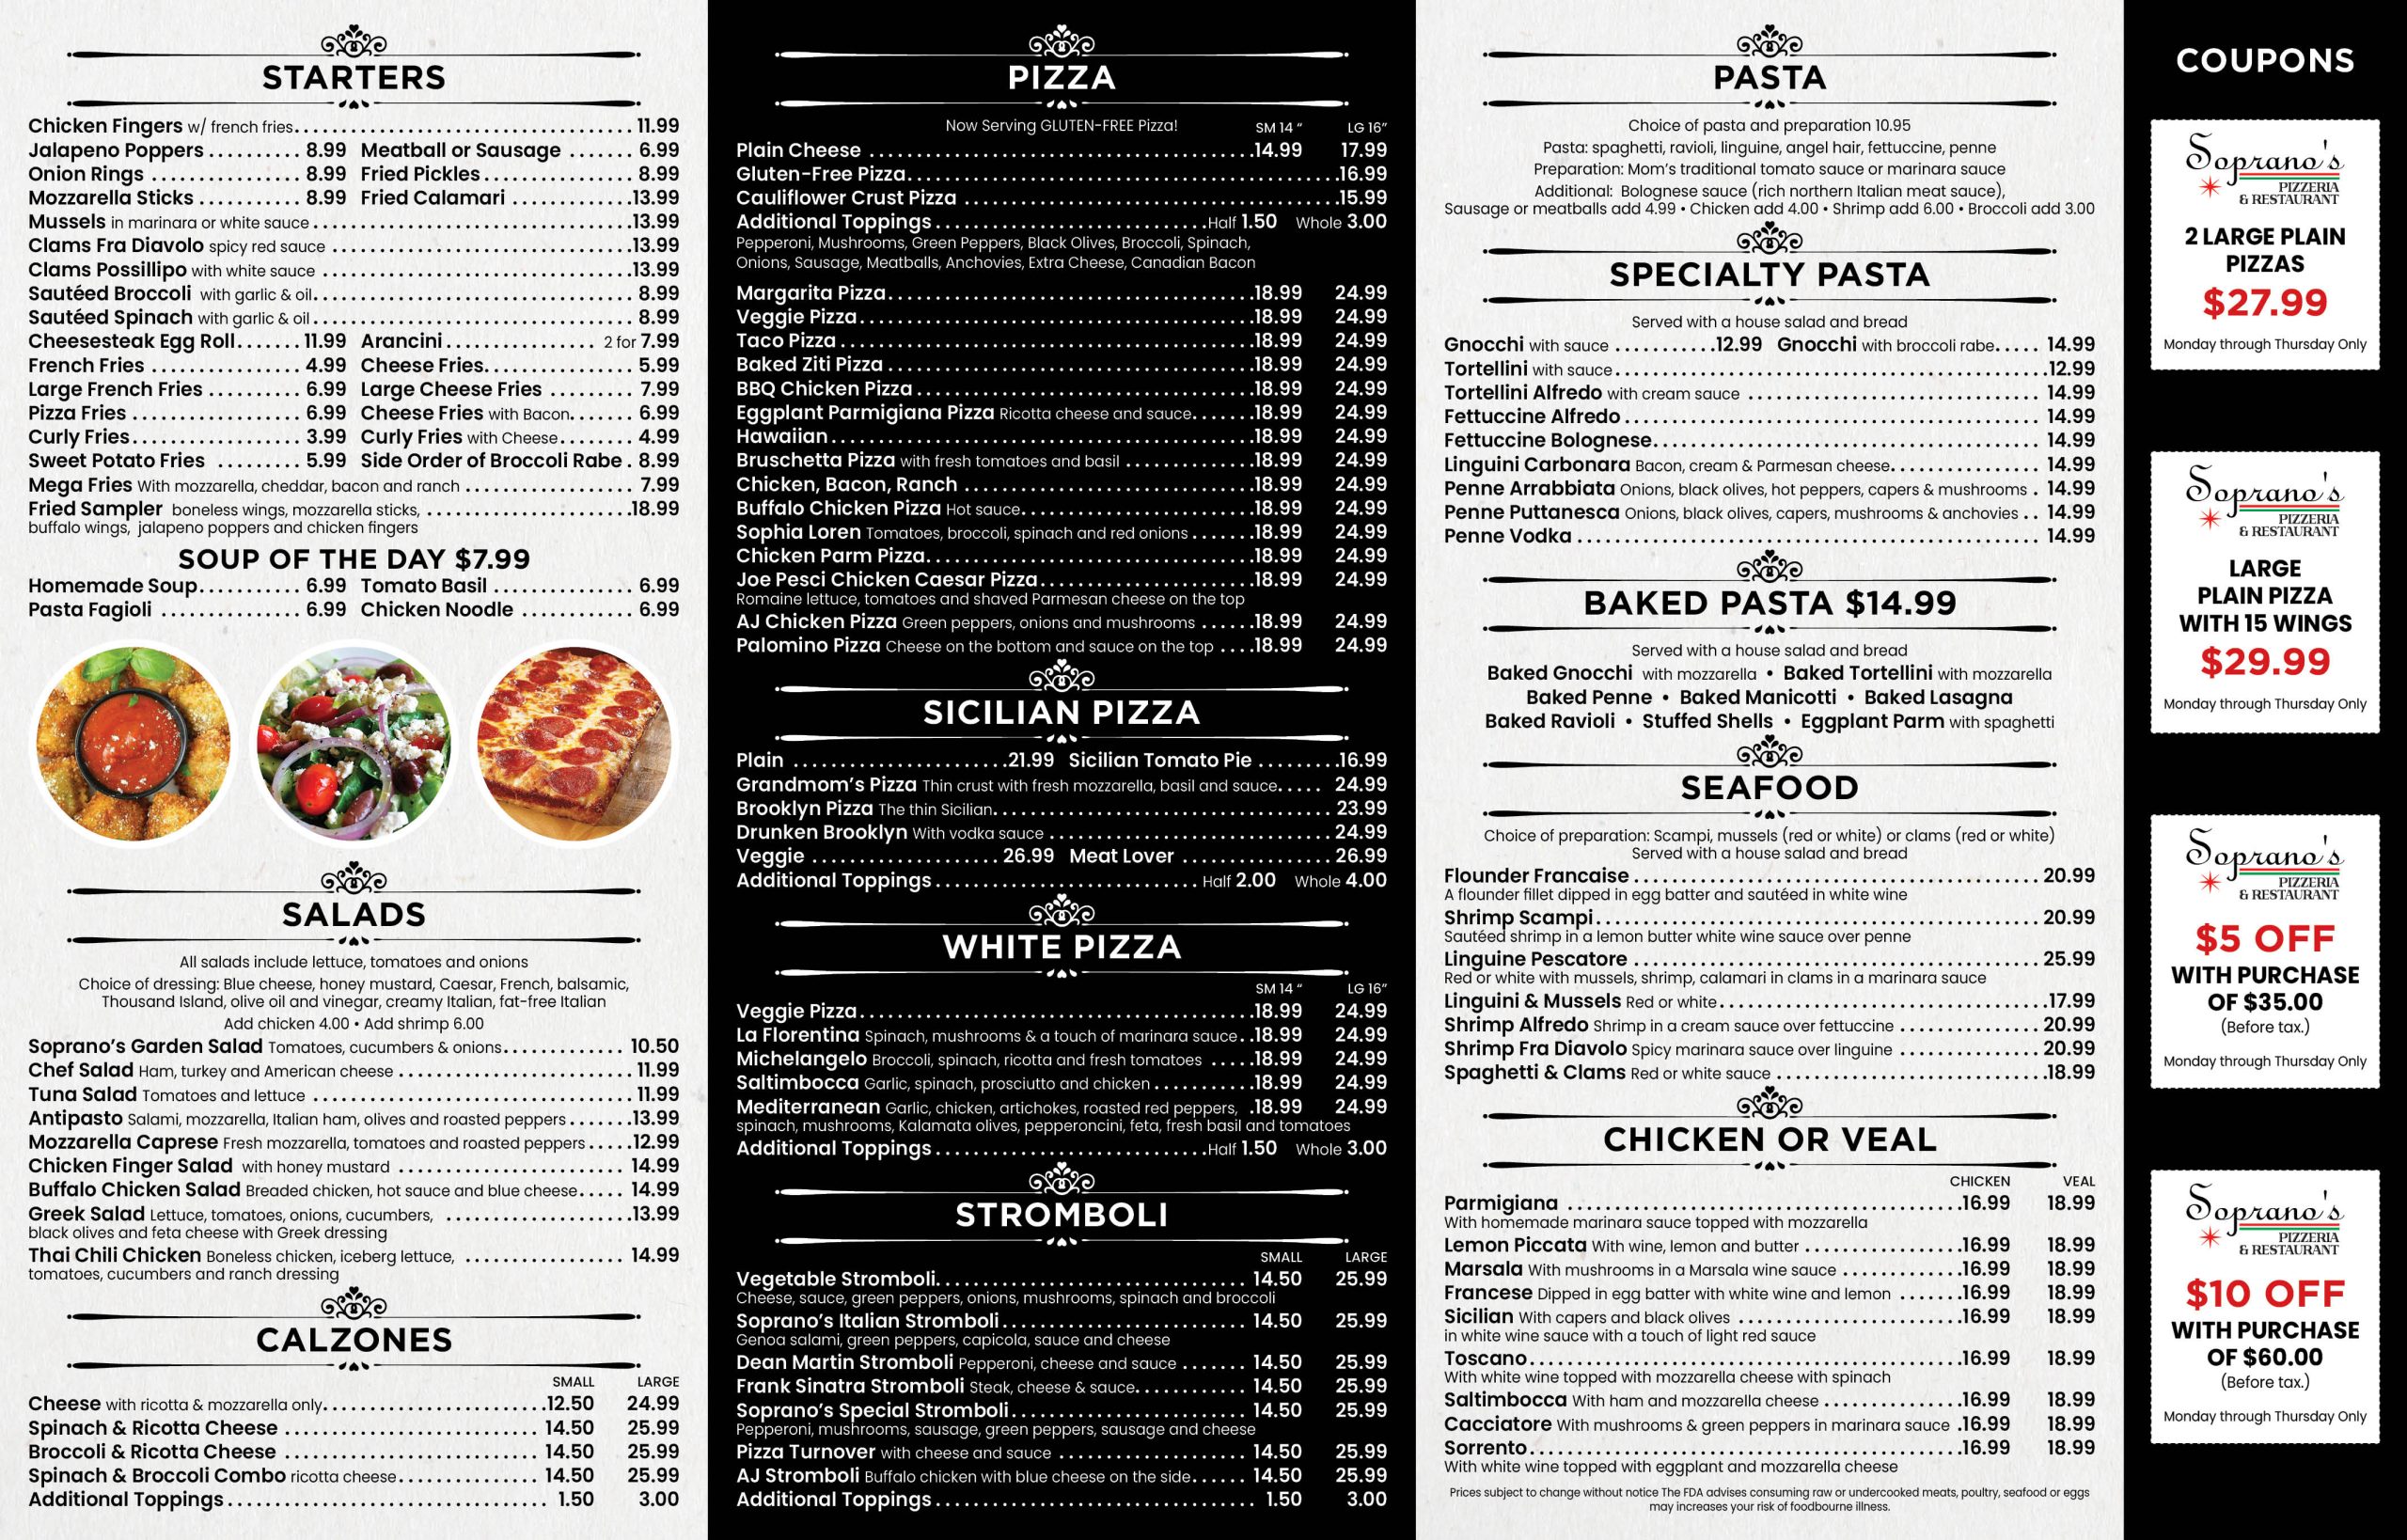 A black and white menu for a restaurant.